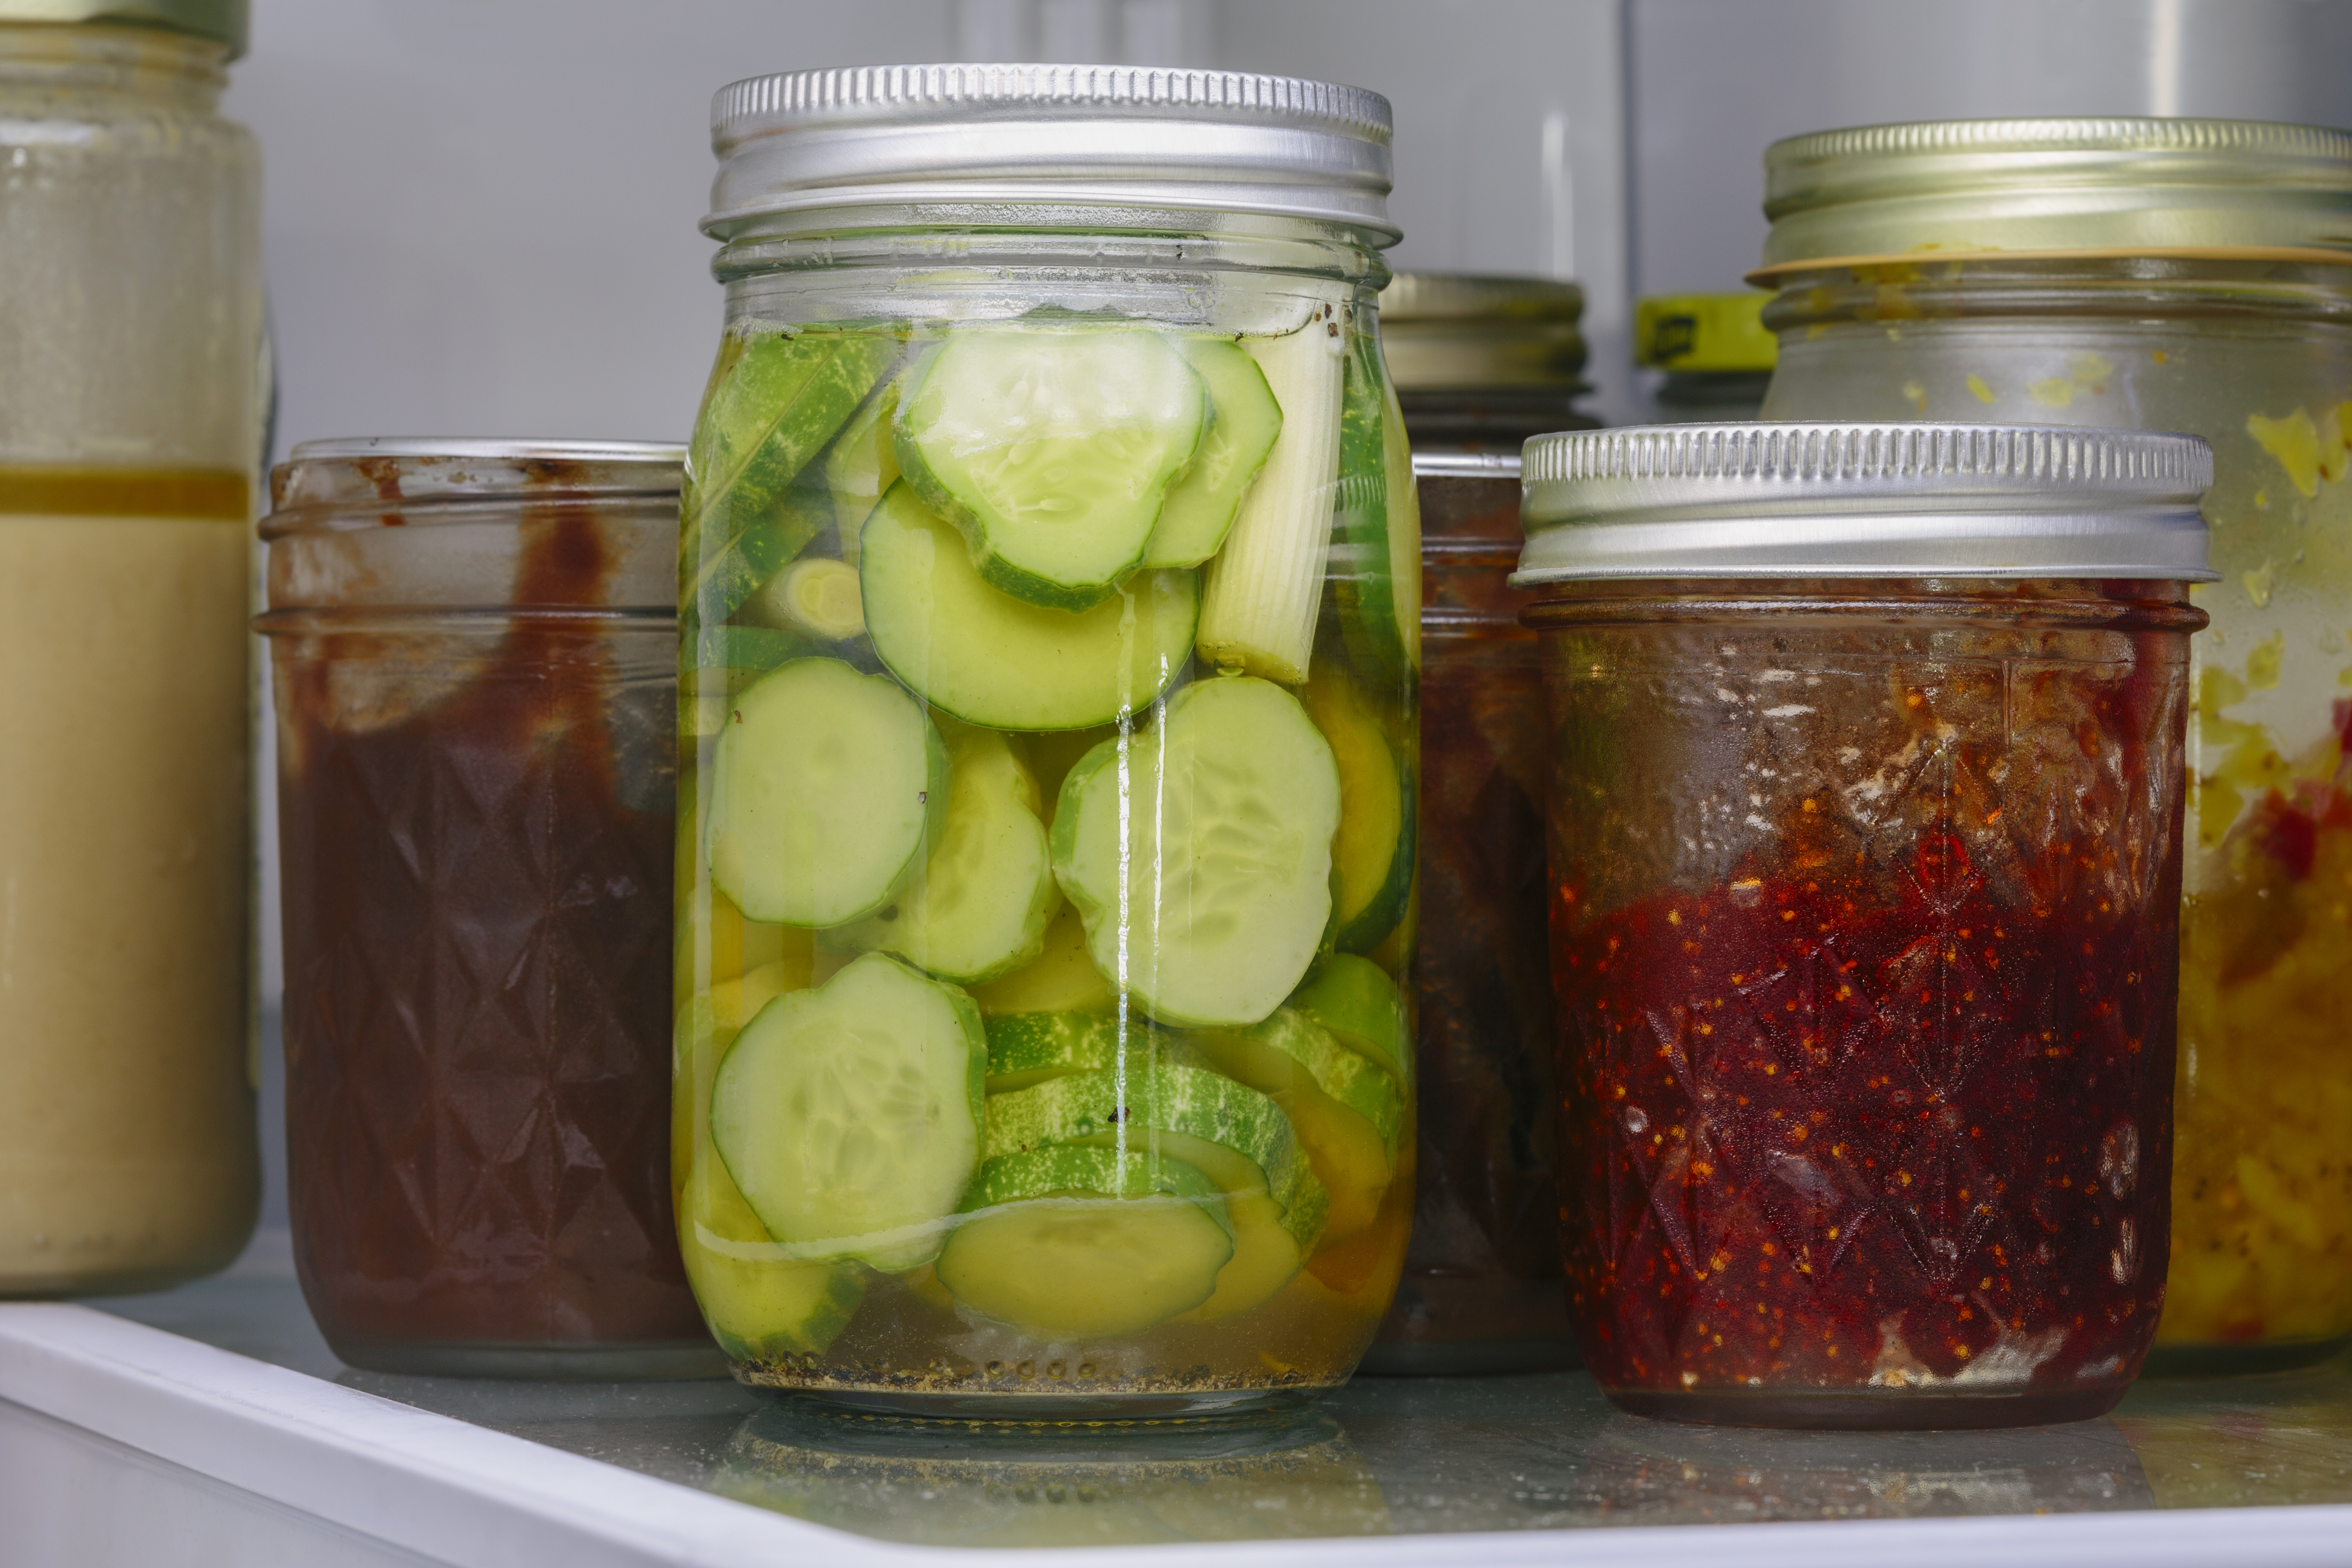 fridge stocked with glass jars of food